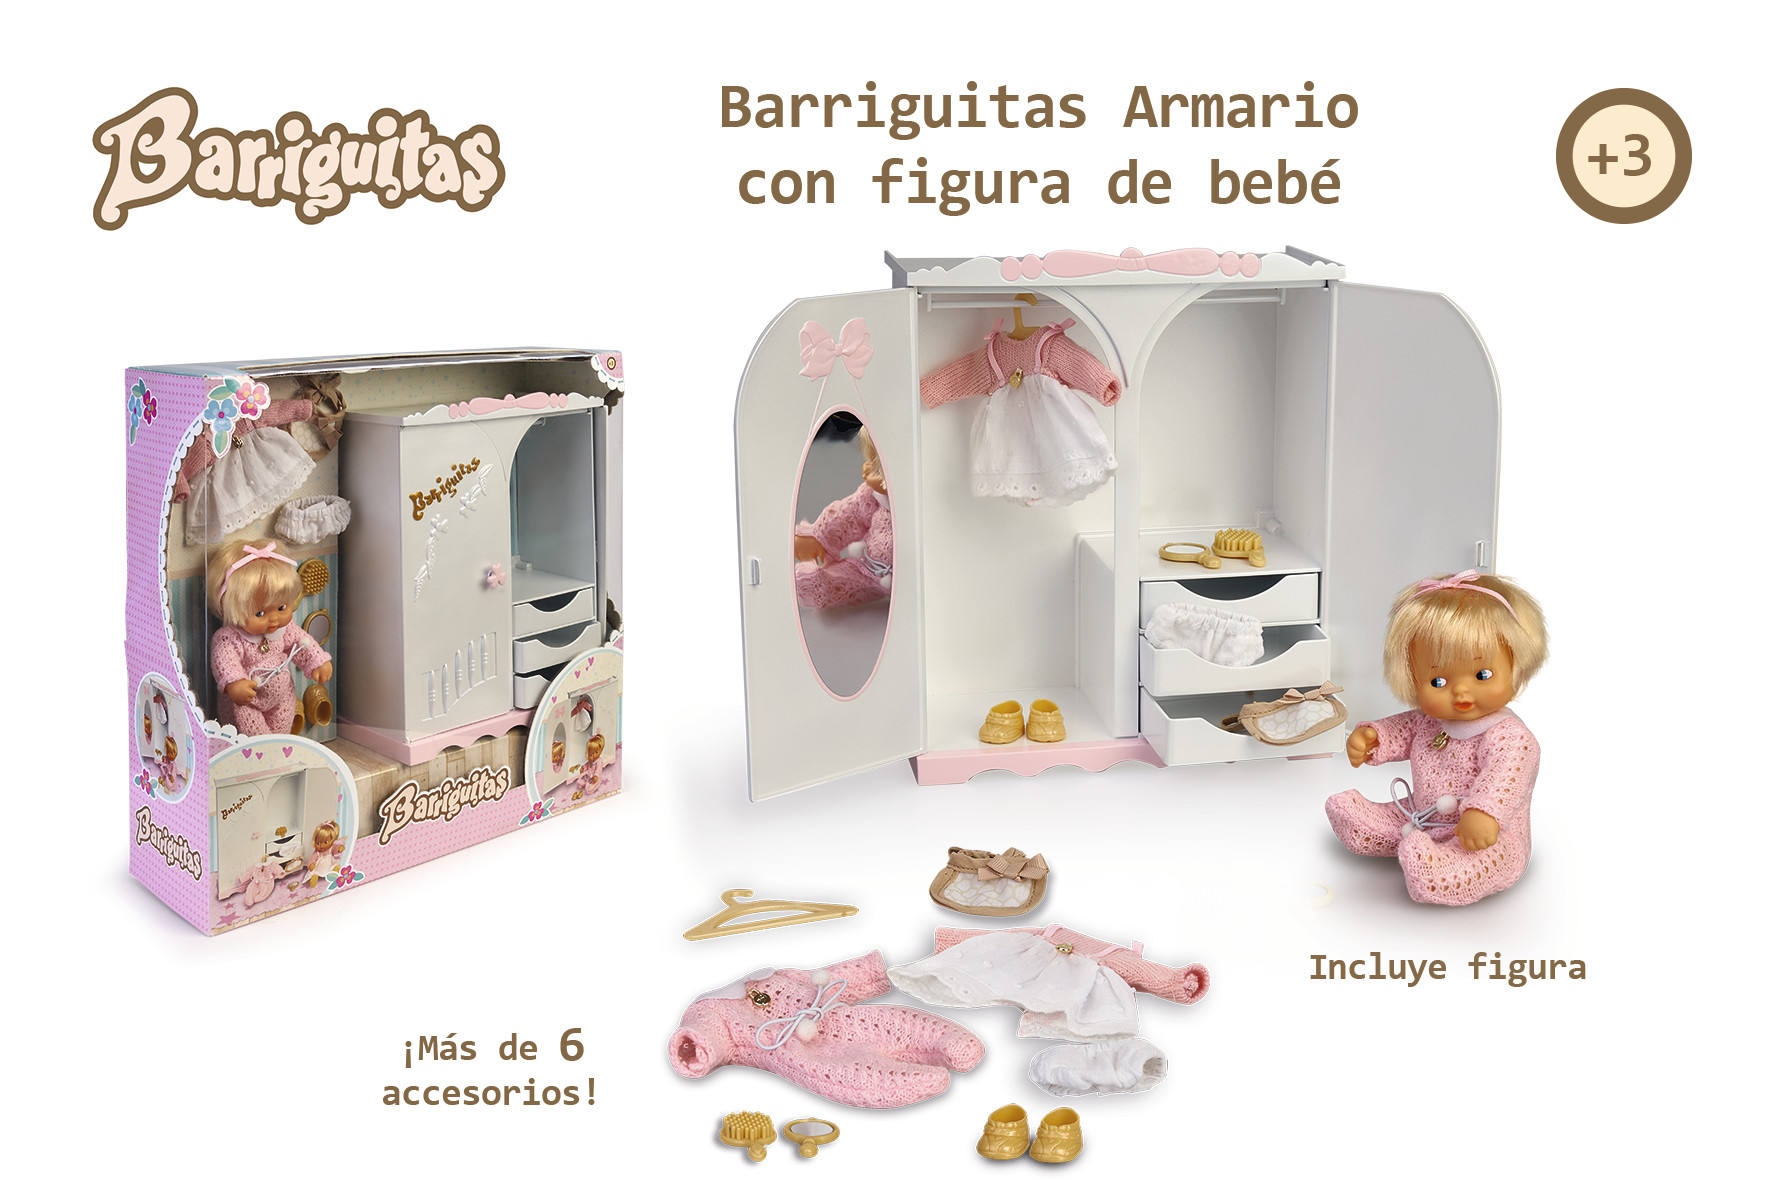 ARMARIO BARRIGUITAS + FIGURA 15811 - N61521